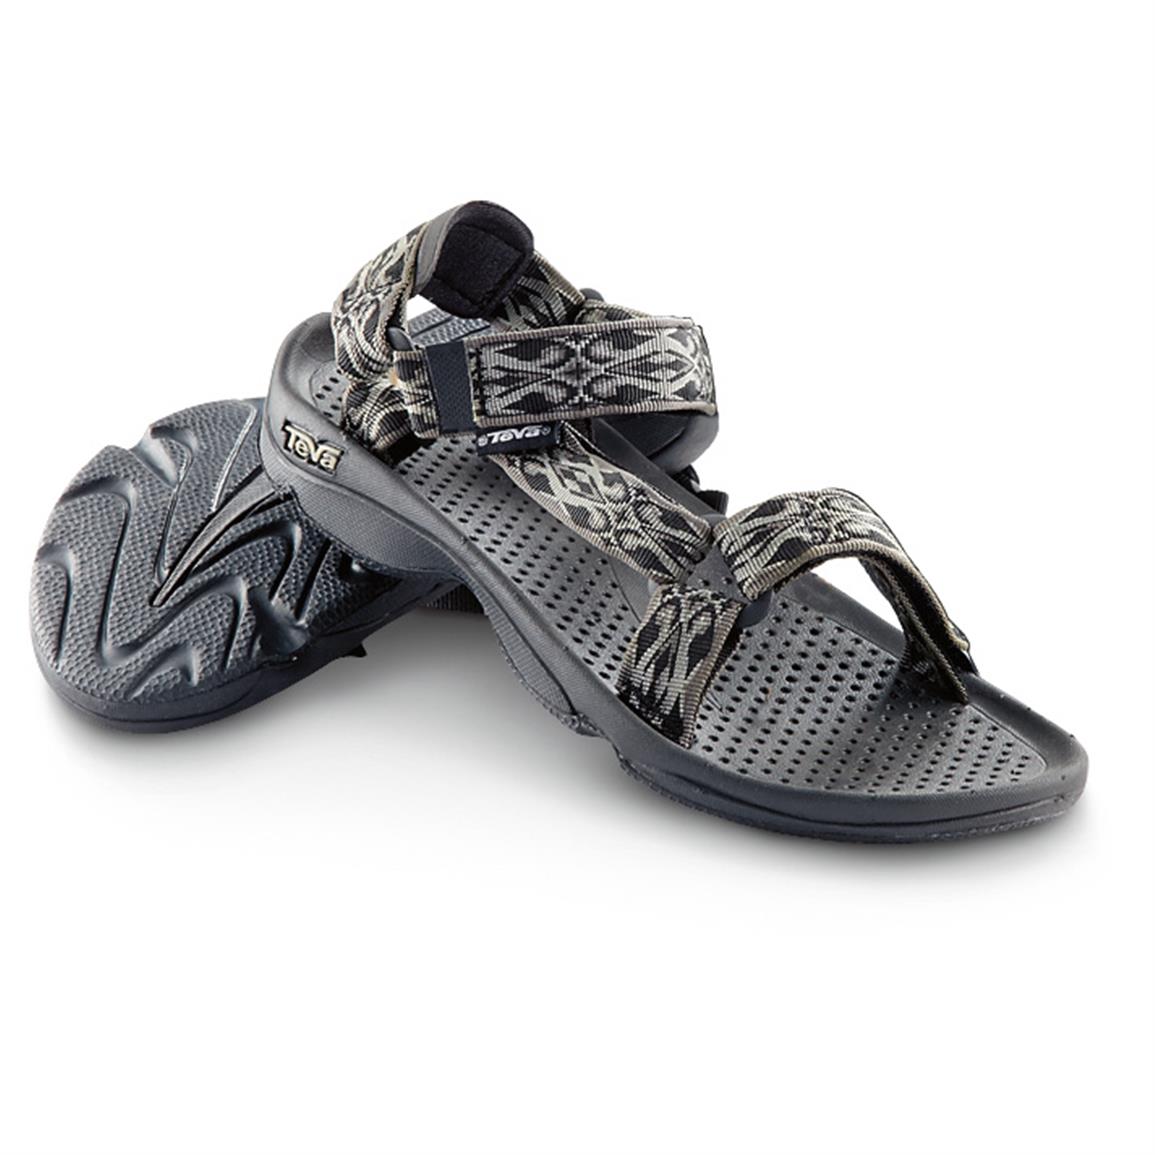 ... Shoes  Sandals  Flip Flops  Men's TevaÂ® Hurricane 3 Sandals, Gray